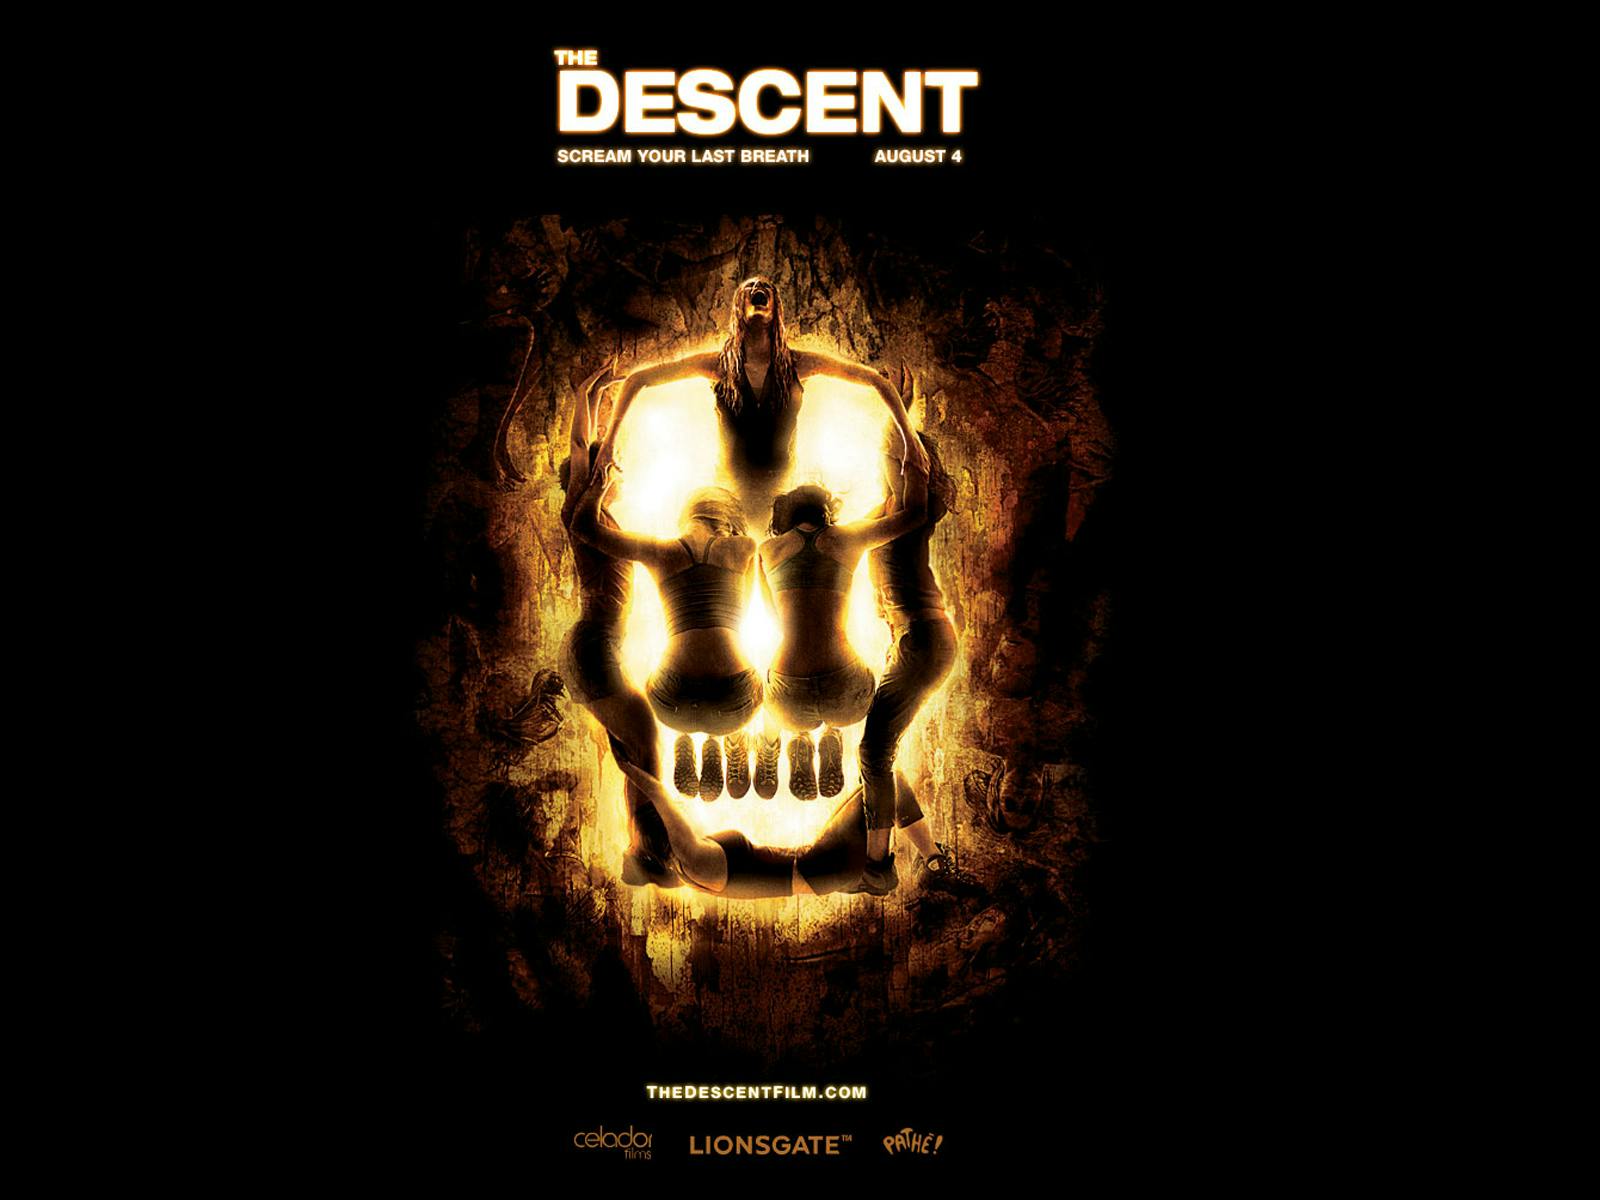 The Descent (2005) Trailer 